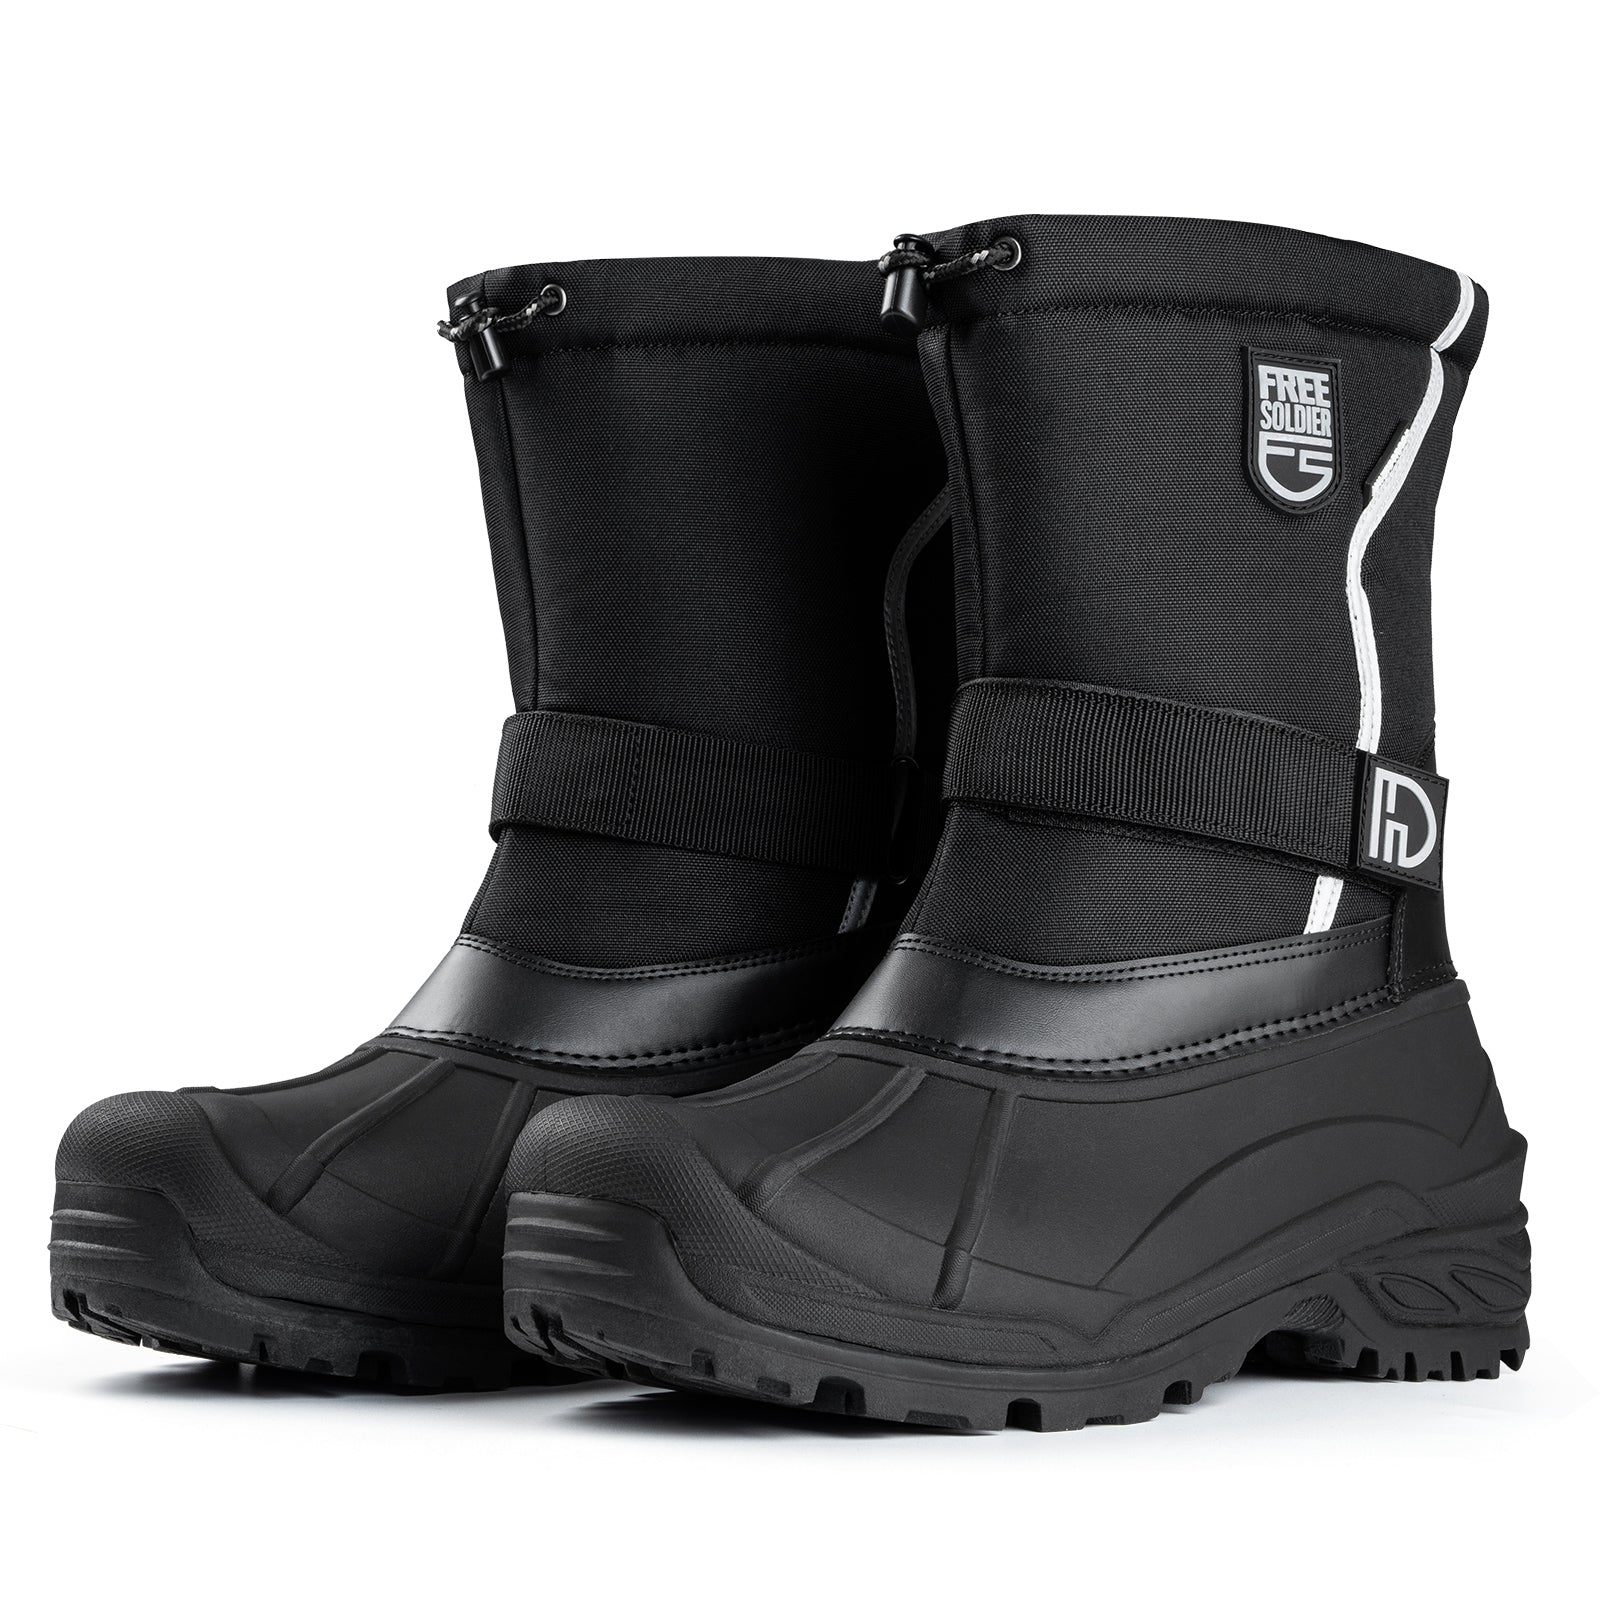 Polainas para botas de nieve Tomtop YB24172B Negro